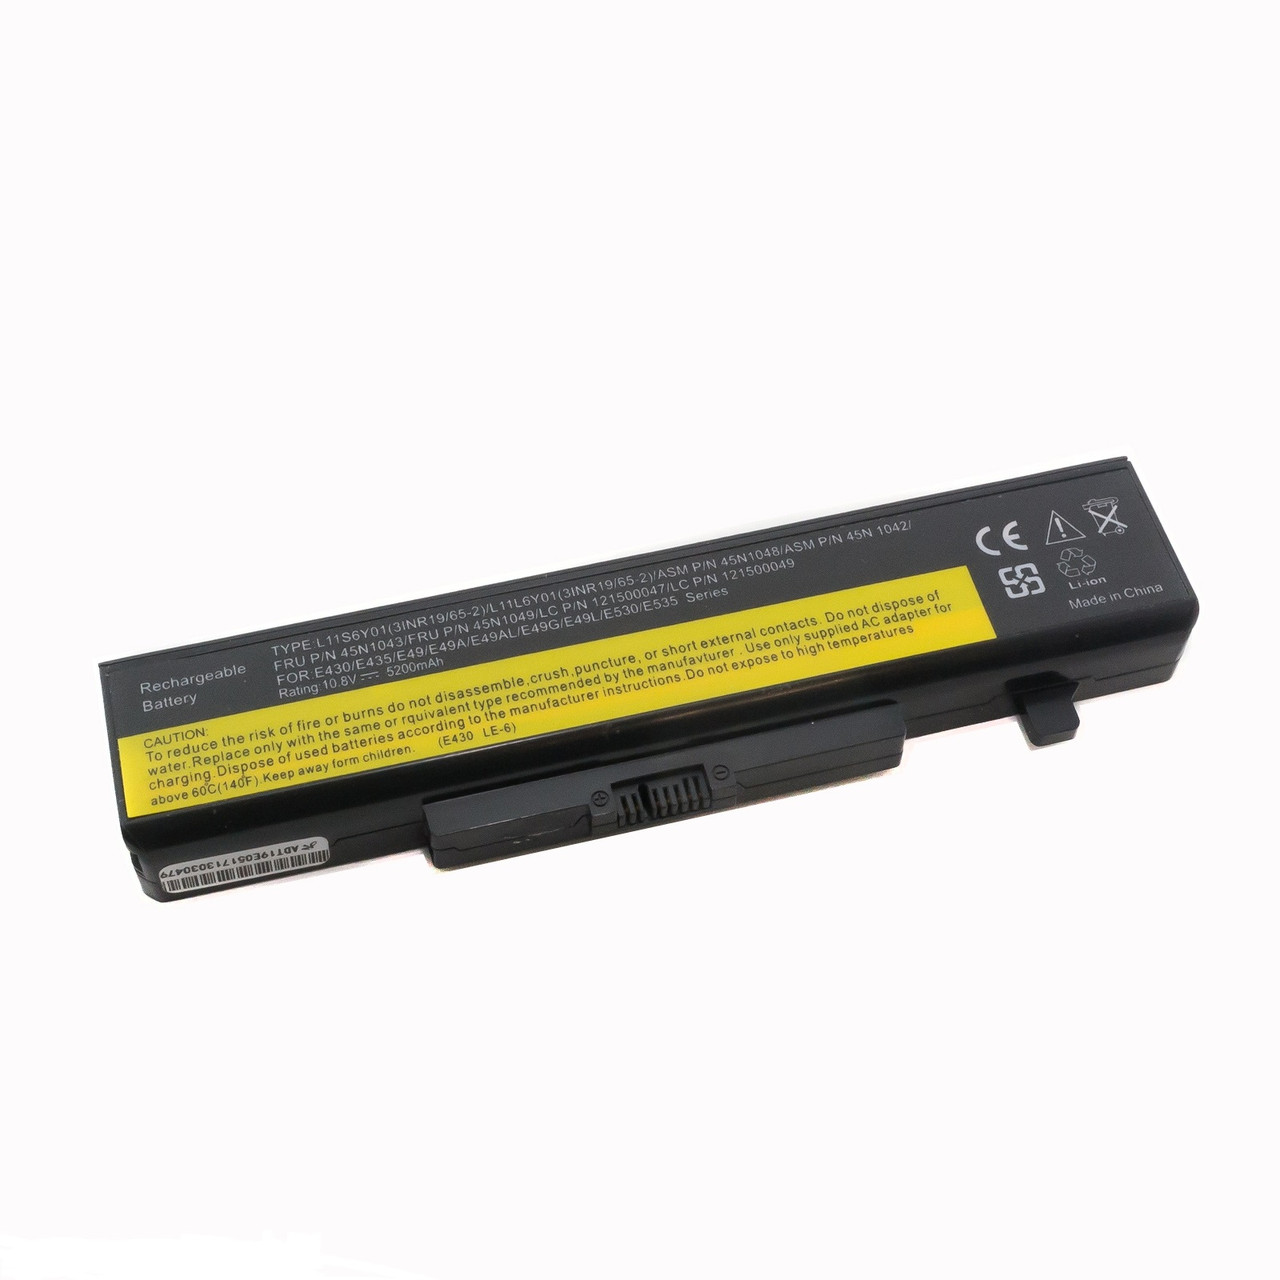 Оригинальный аккумулятор (батарея) для ноутбука Lenovo IdeaPad V580c (L11L6Y01) 10.8V 48Wh